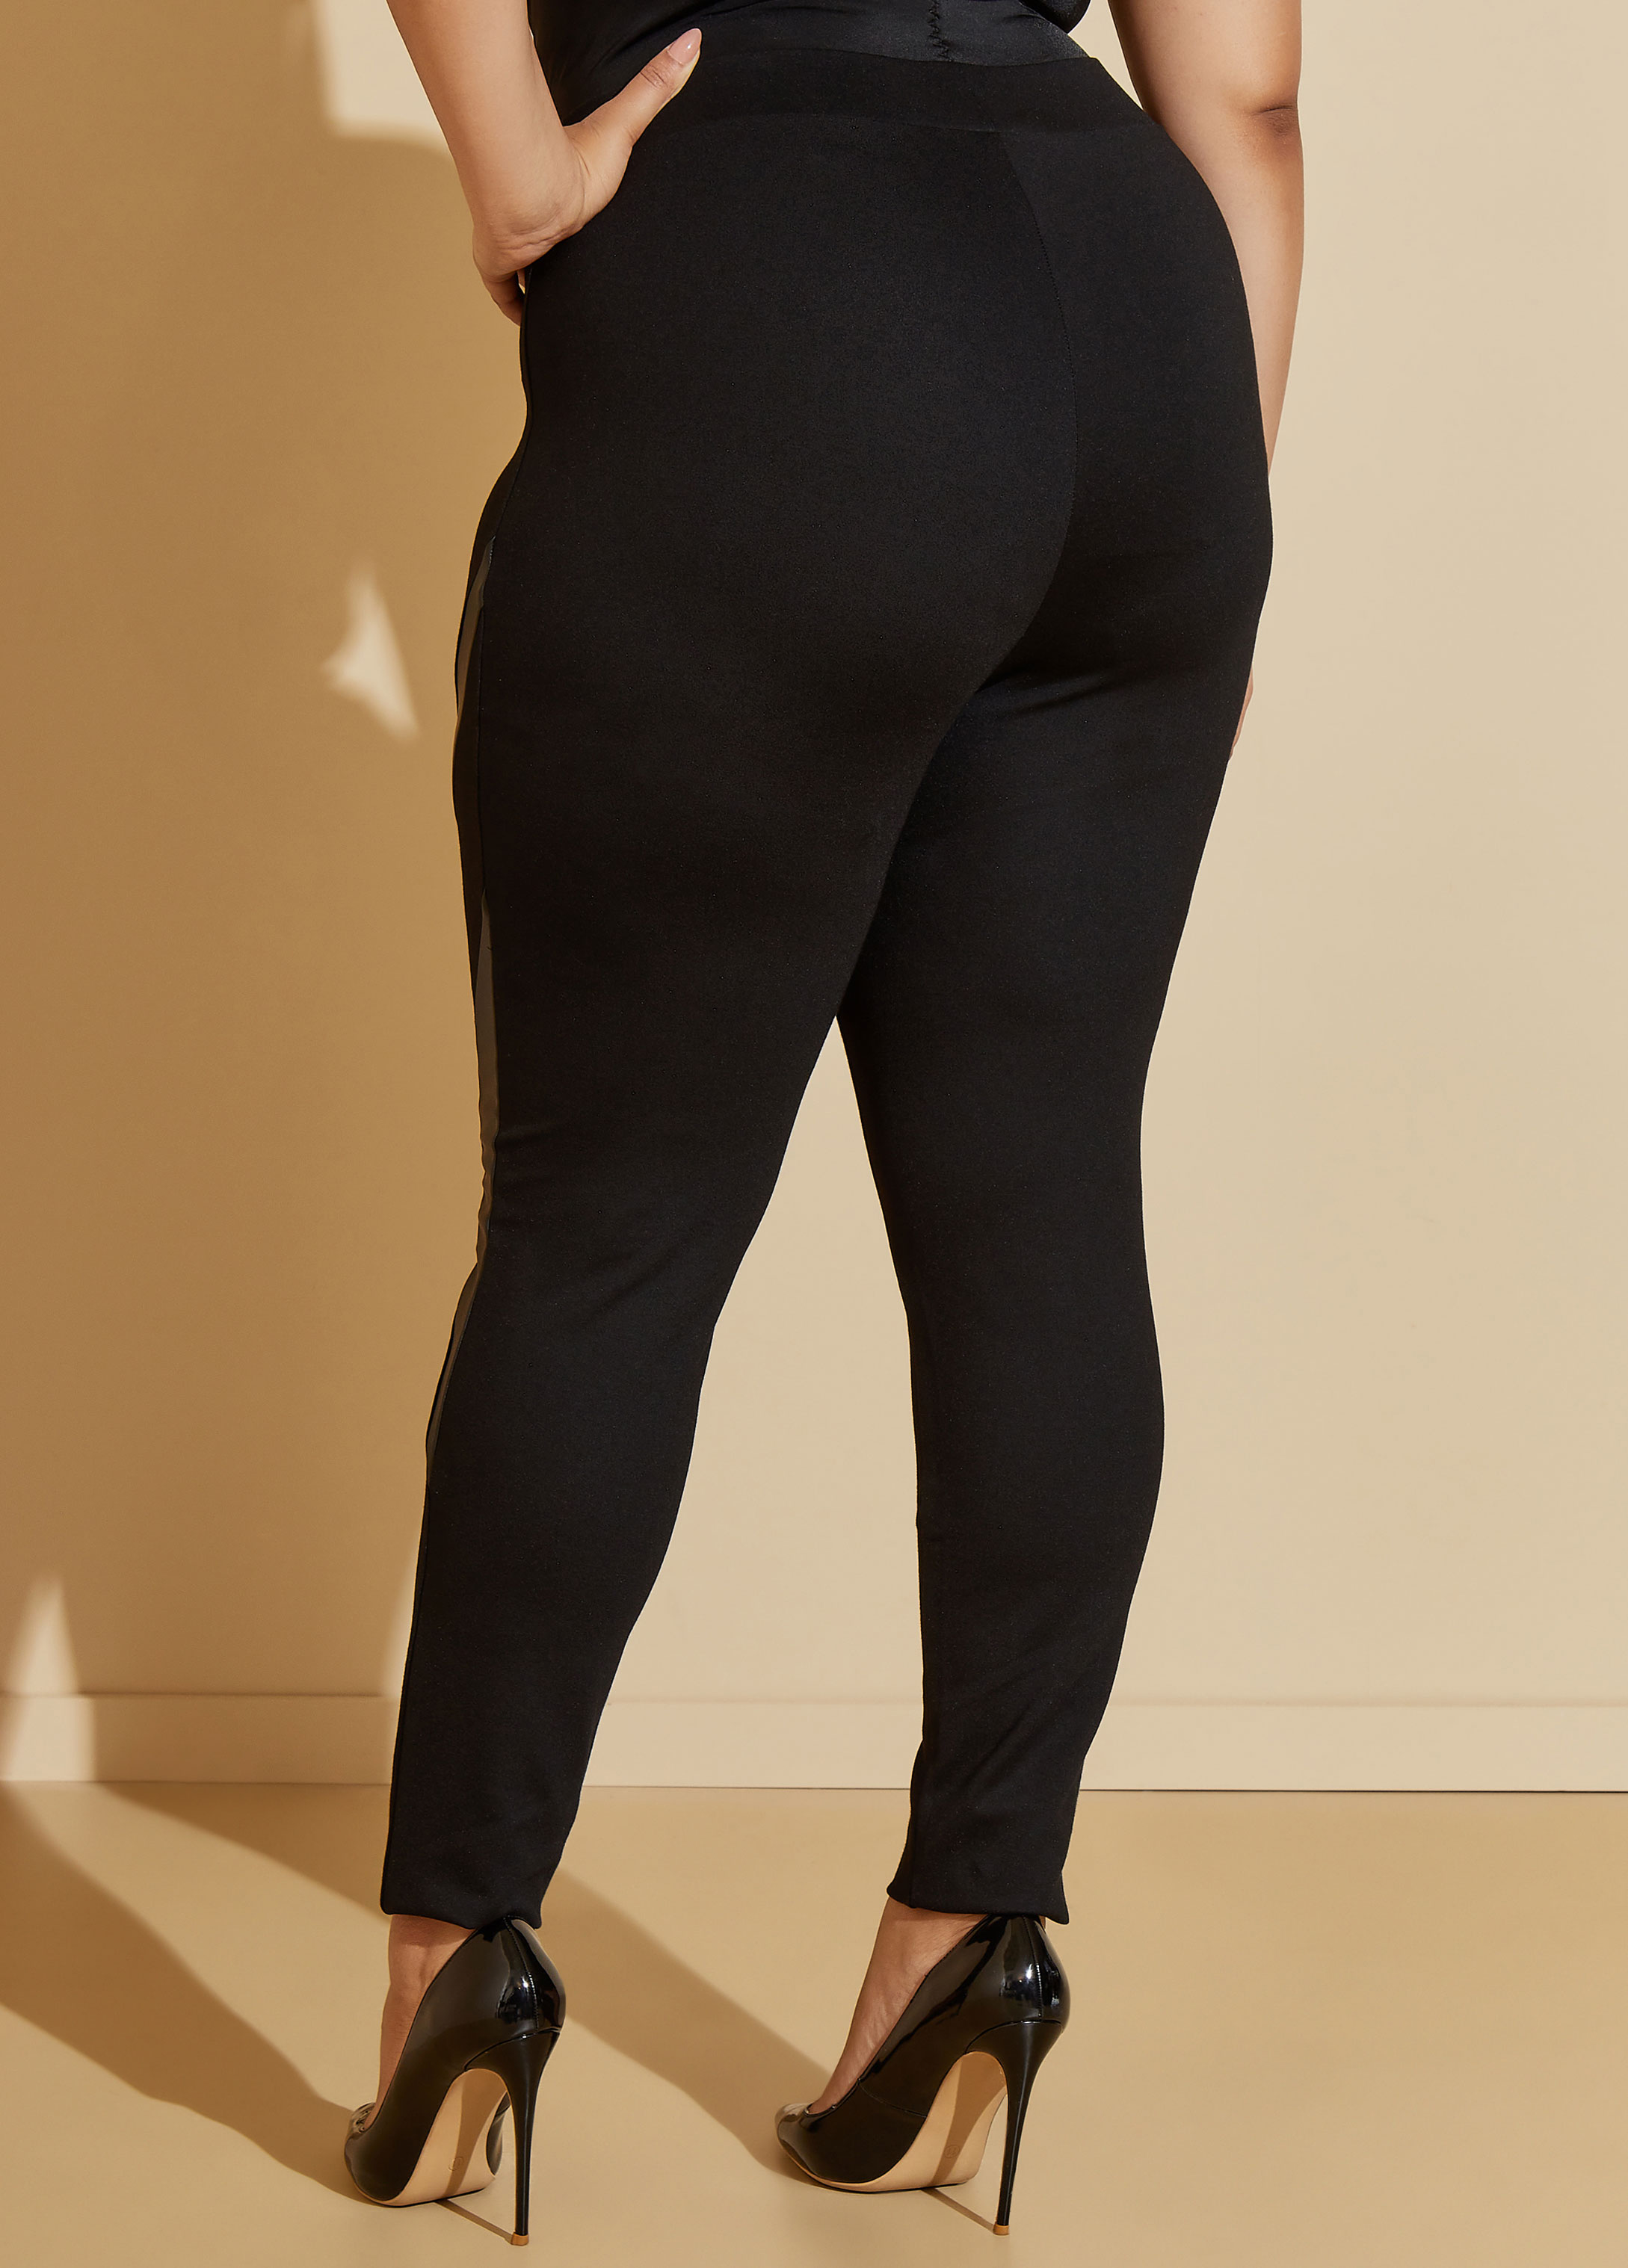 Ave Leisure  Women's Plus Size Splice Panel Legging - Black - 30w